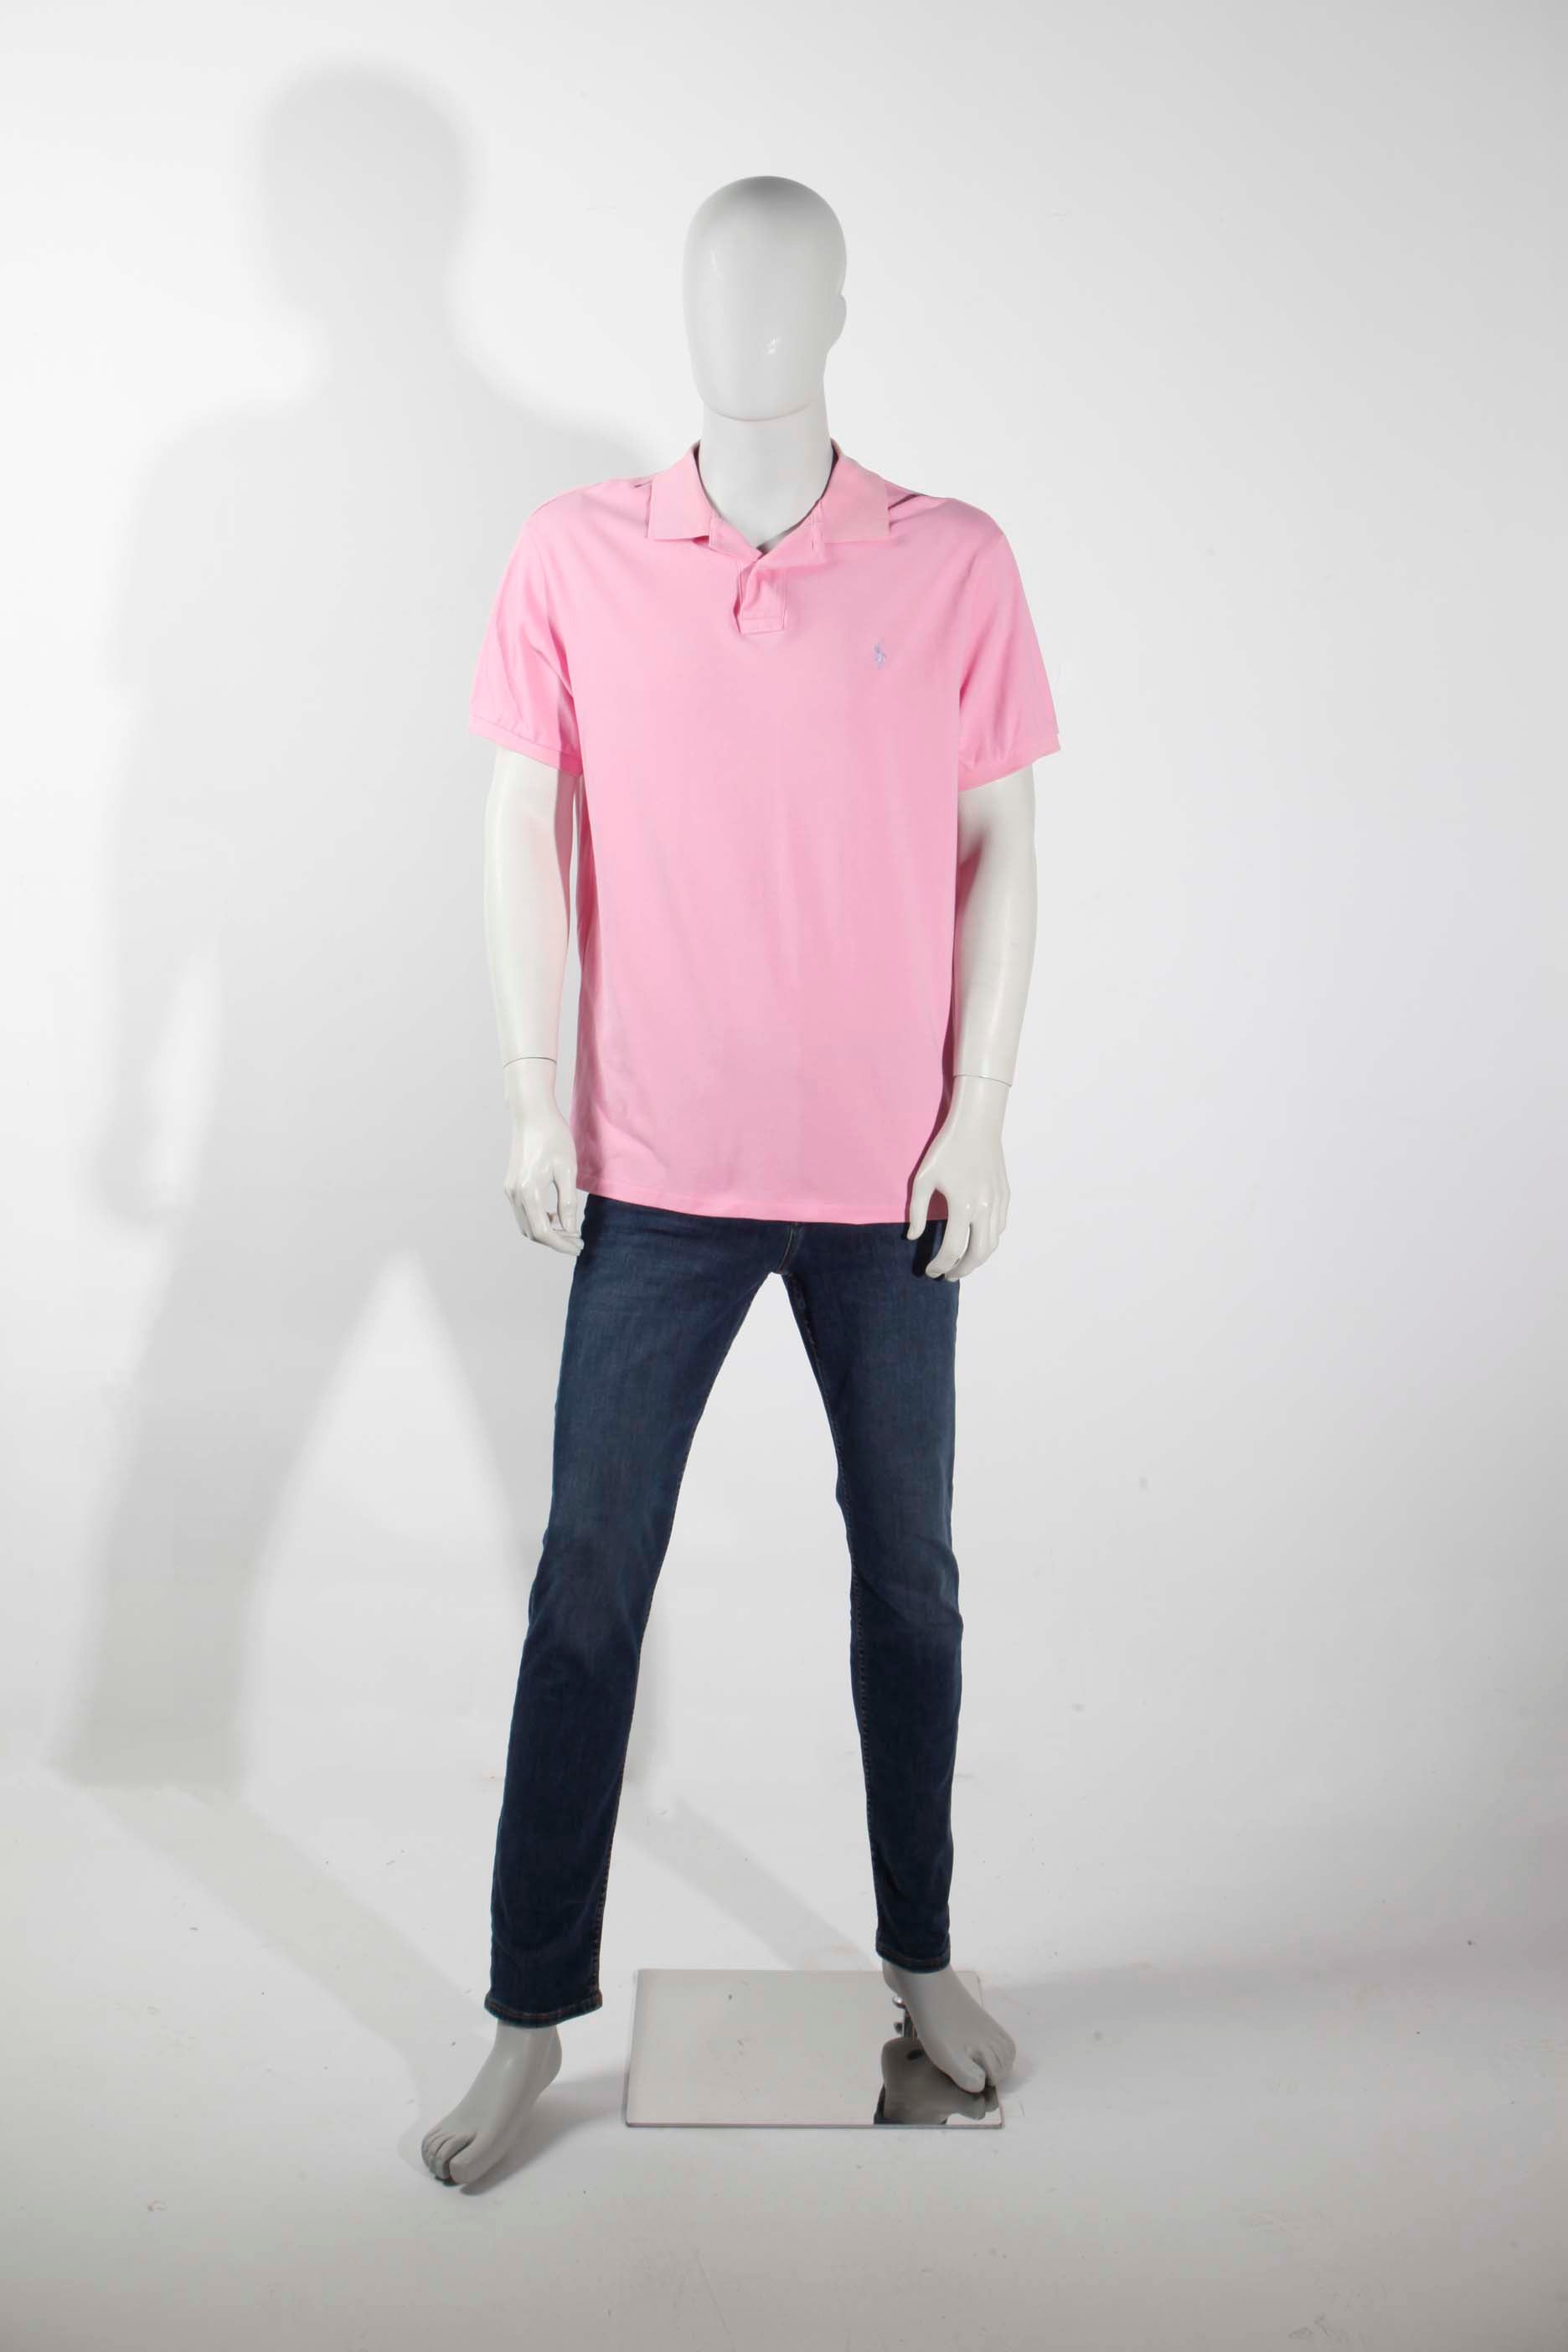 Mens Polo Ralph Lauren Pink Polo Shirt  (XLarge)